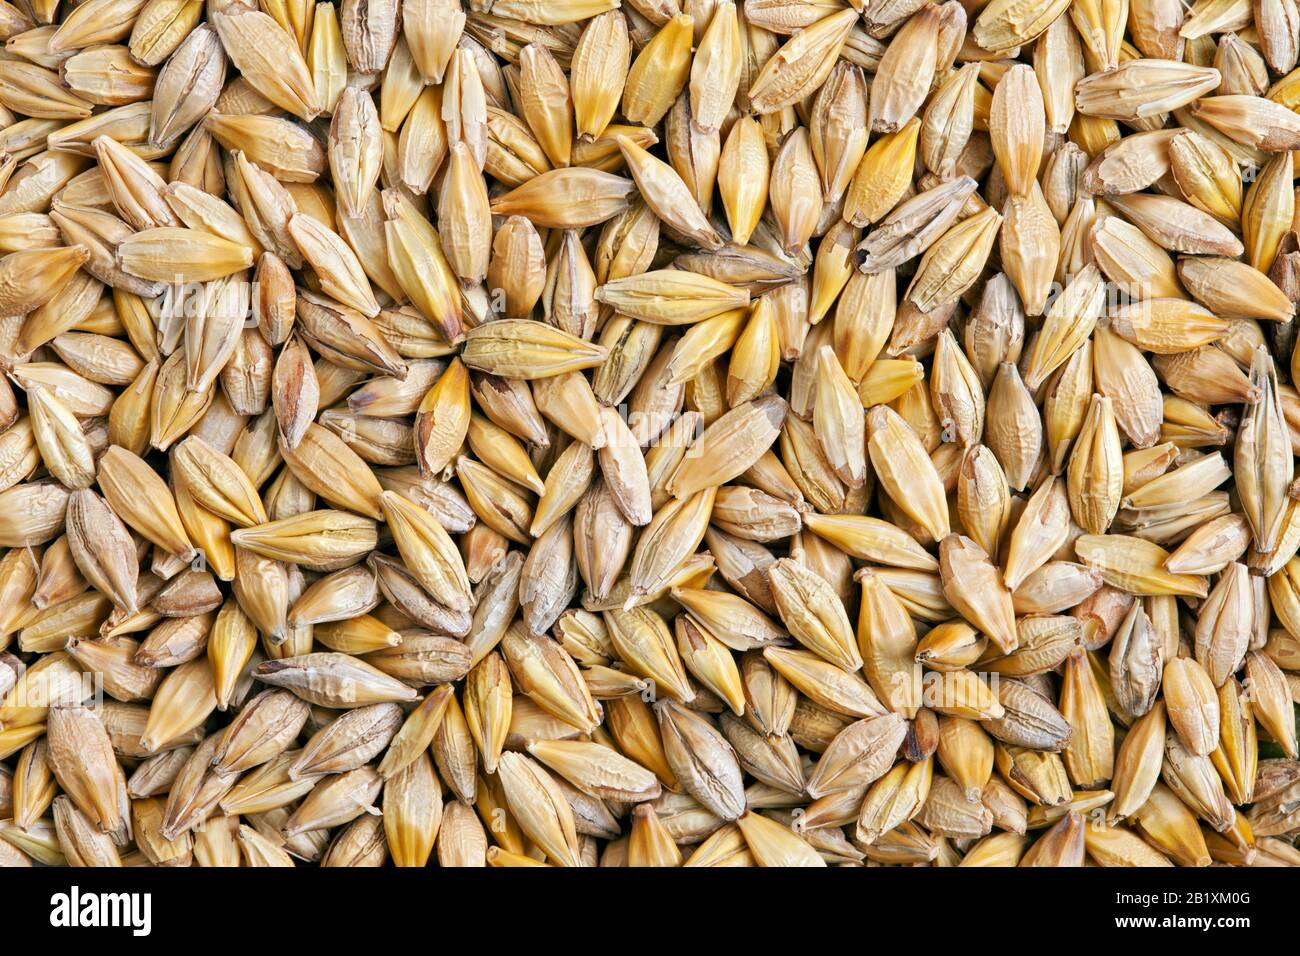 Barley grain (Hordeum). Barley is a major cereal grain, a member of the grass family. Stock Photo